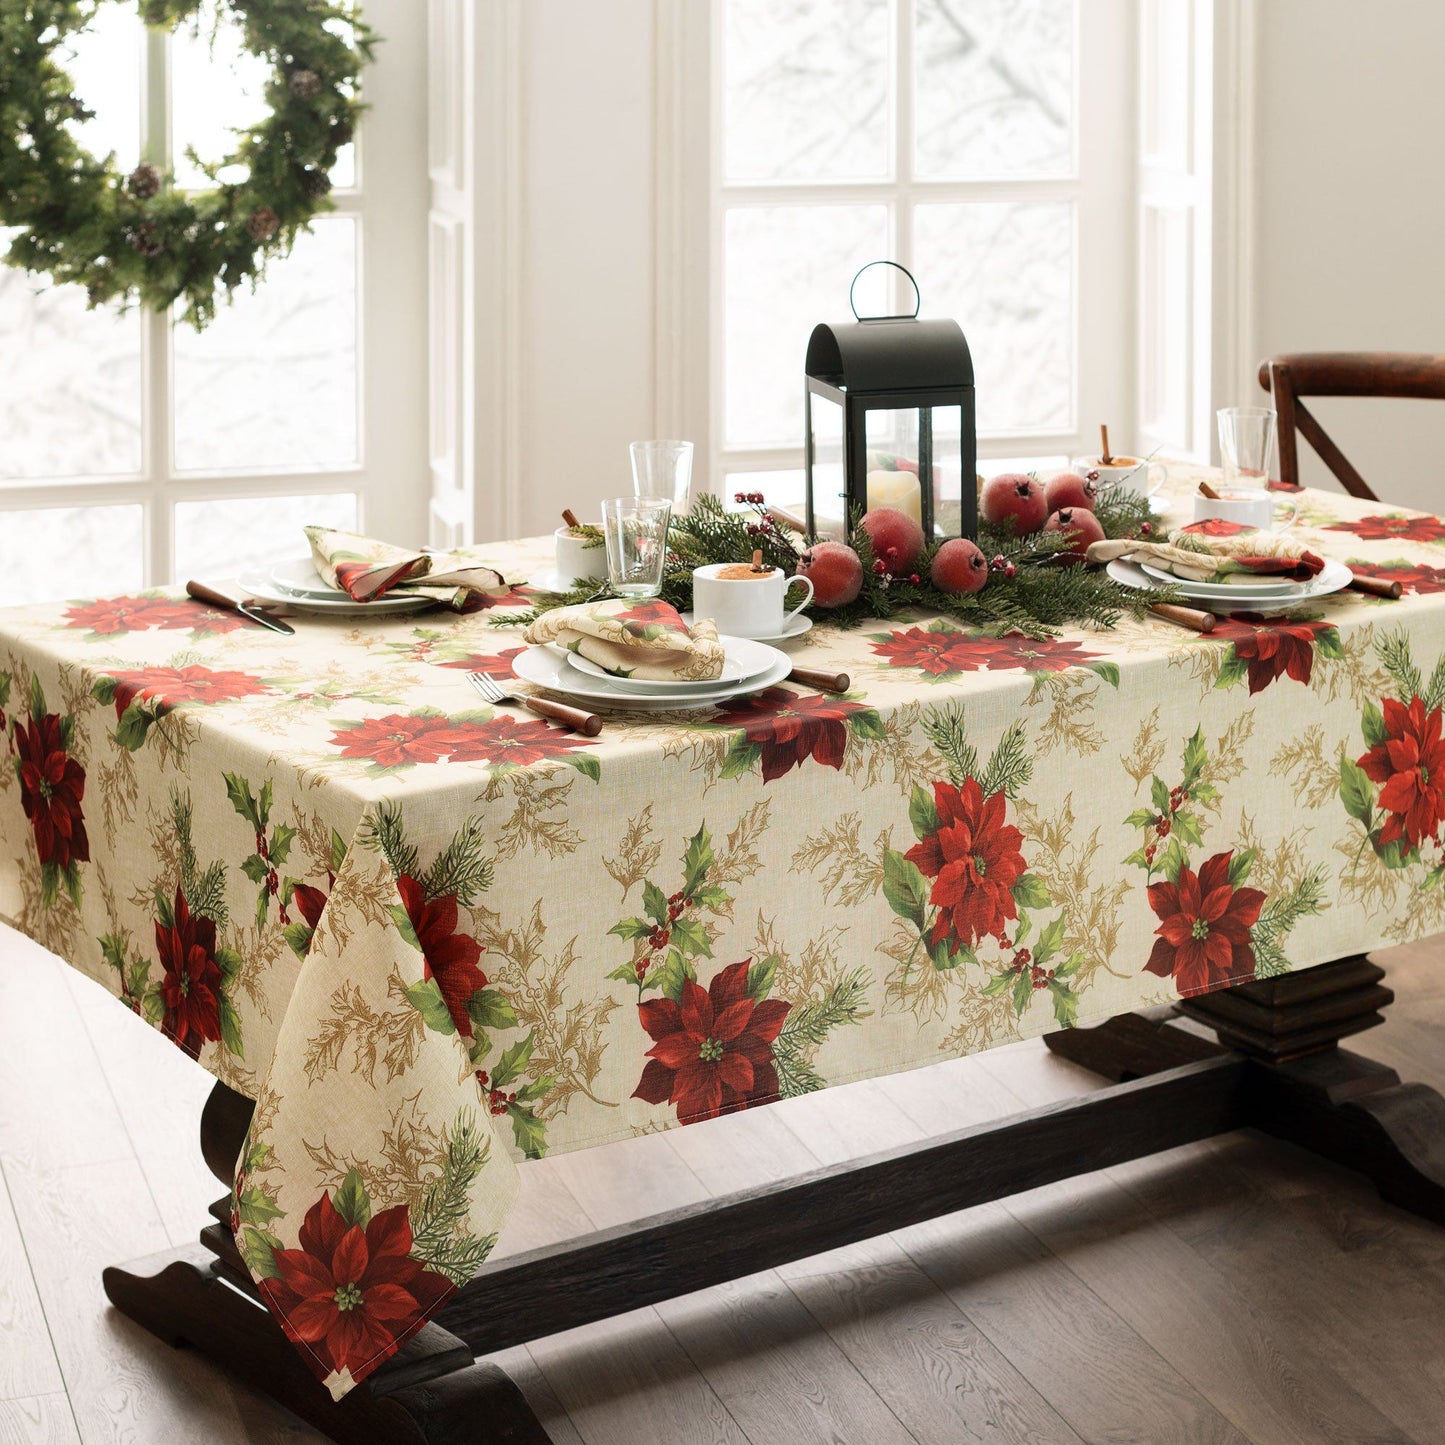 Festive Poinsettia Holiday Cloth Napkins, Set of 4-Elrene Home Fashions